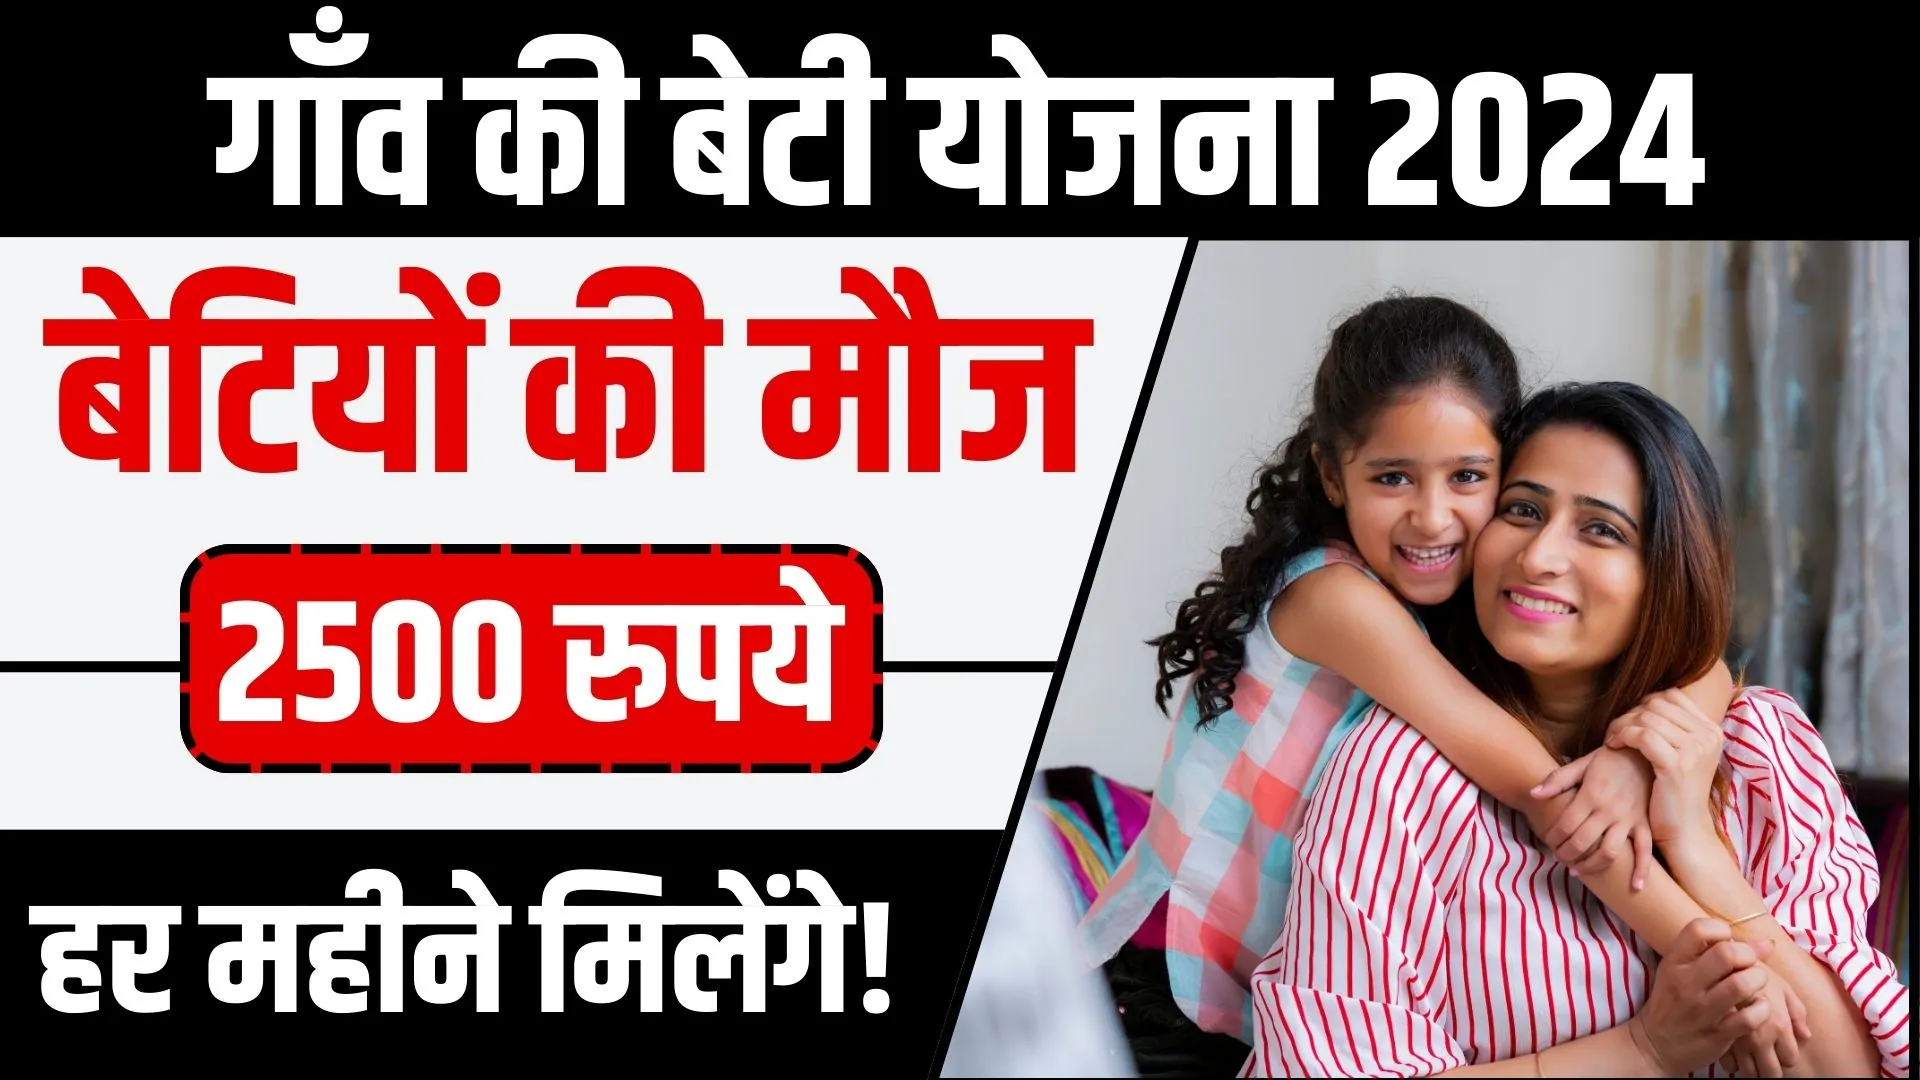 Aapki Beti Scholarship Yojana 2024: सभी छात्राओं को मिलेगी 2500 रुपये की छात्रवृति, आवेदन अंतिम तिथि नजदीक